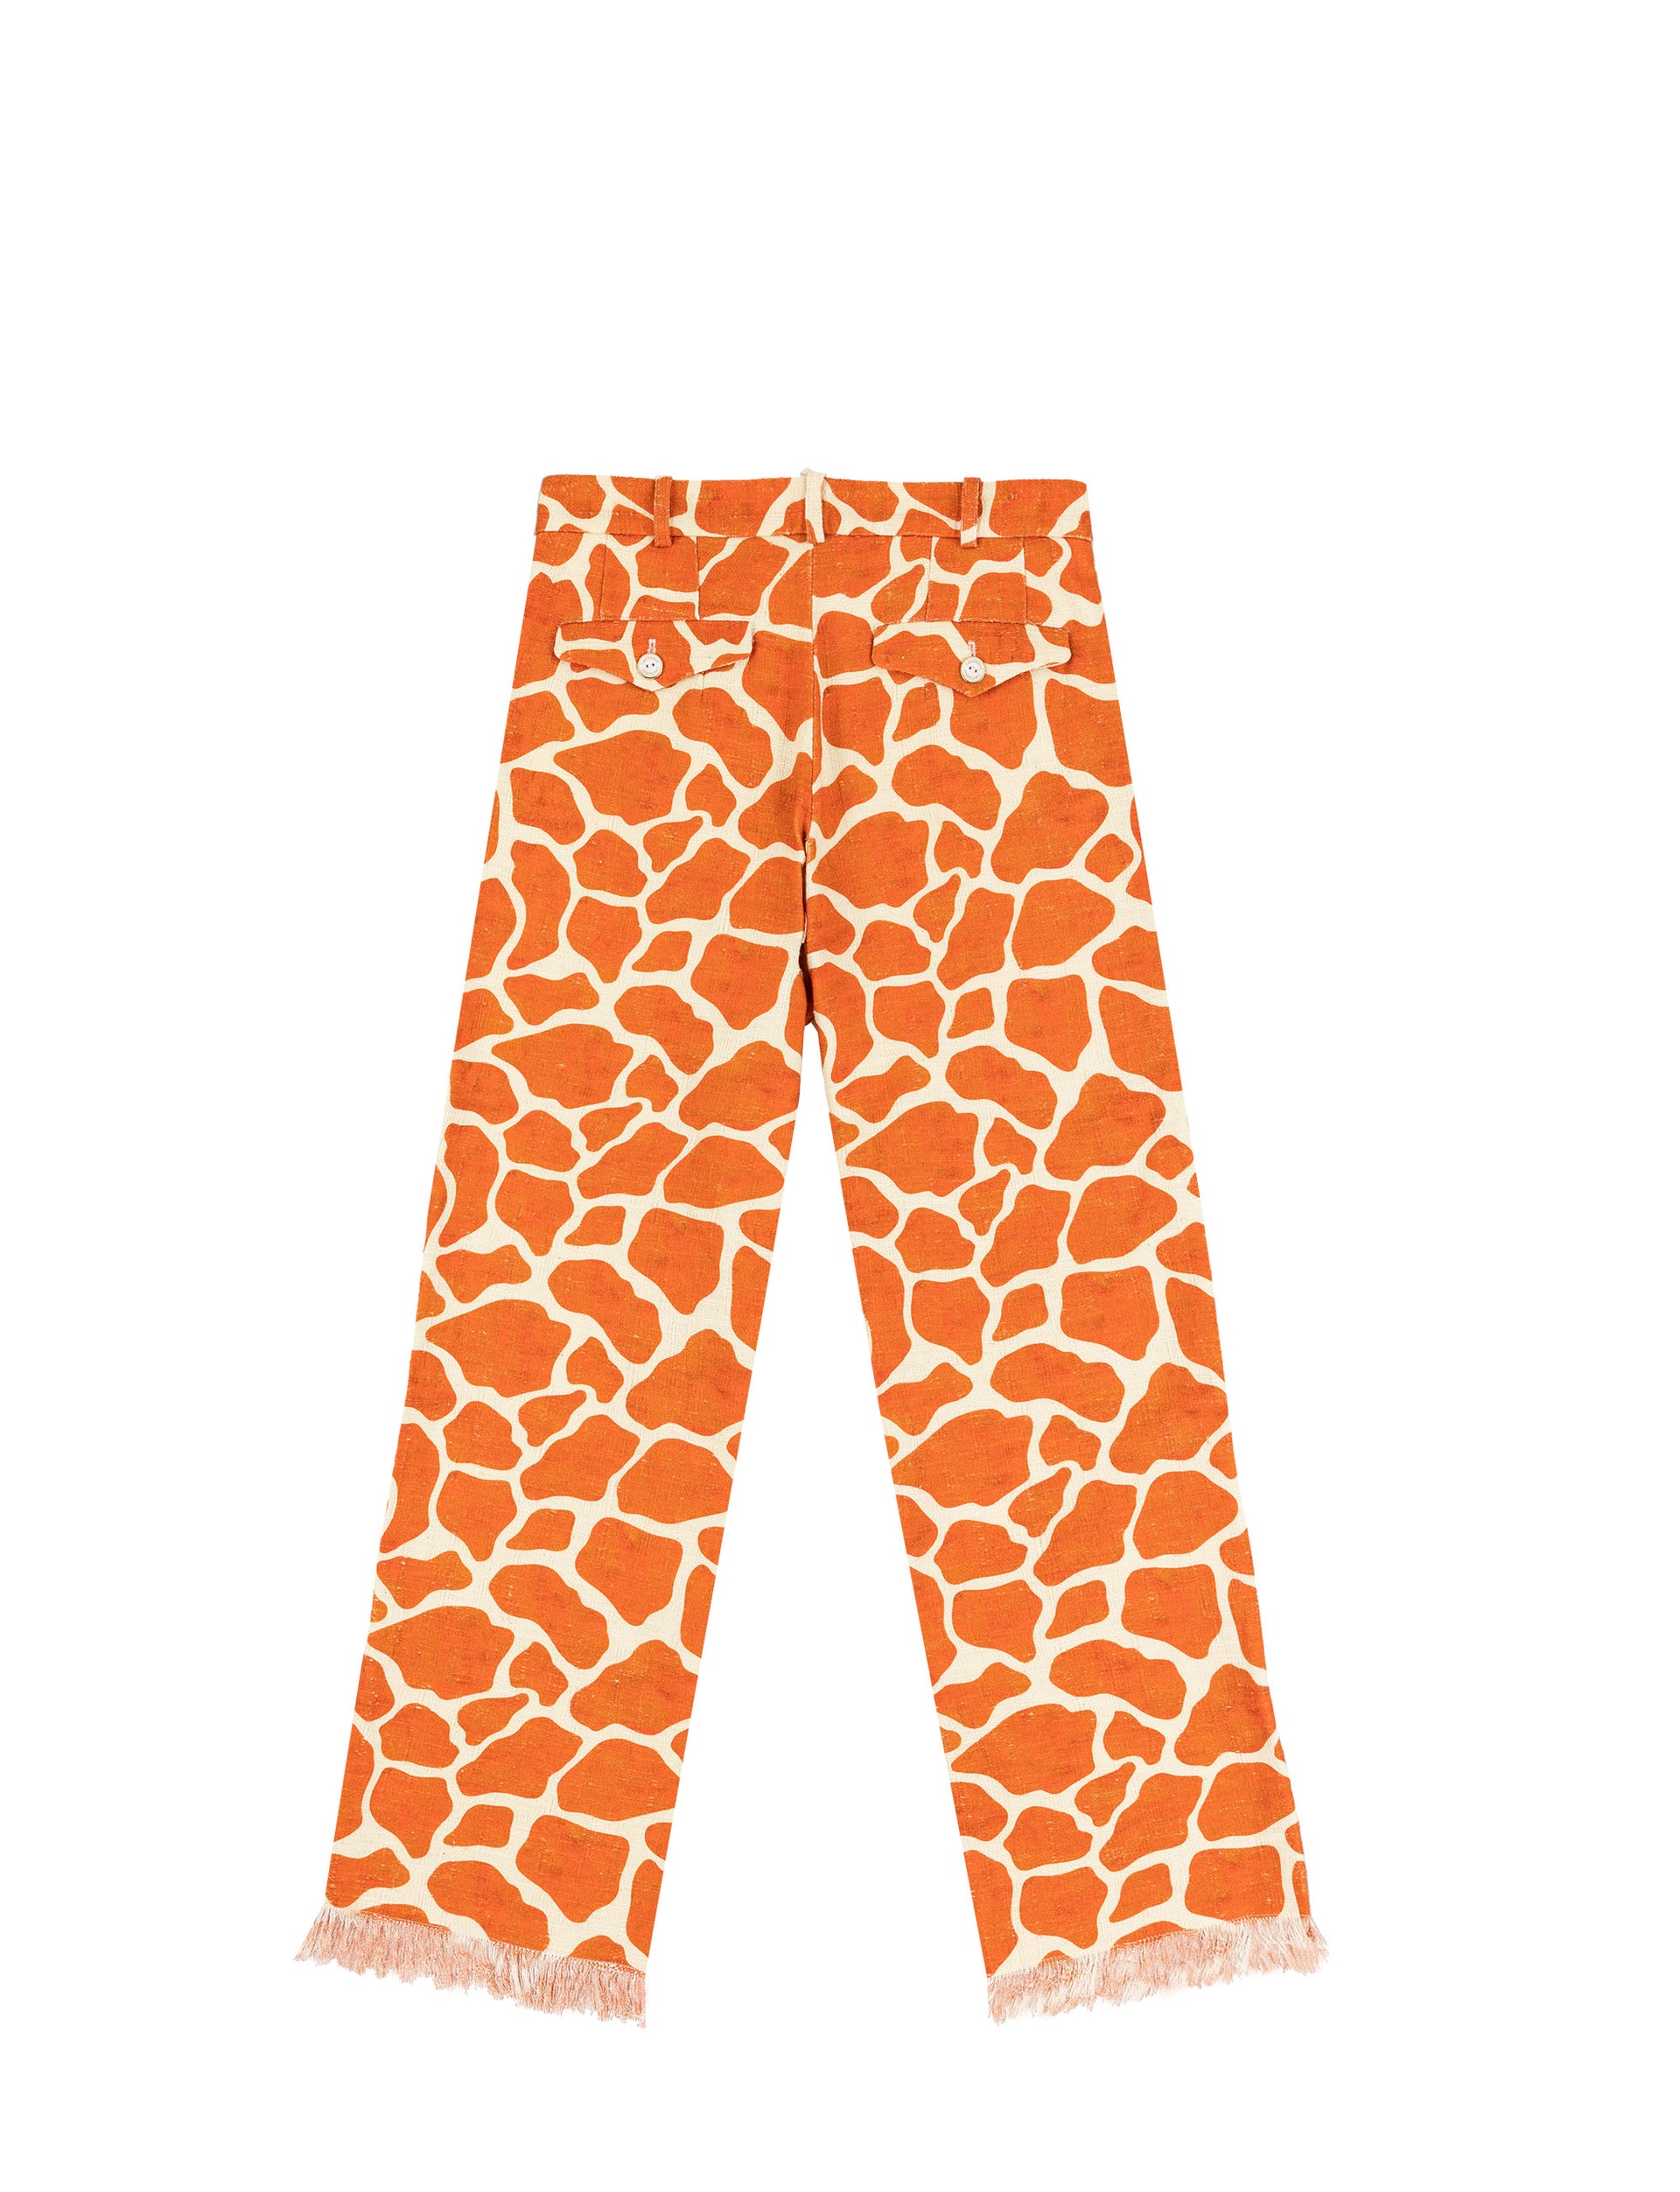 LATE CHECKOUT Giraffe Trousers